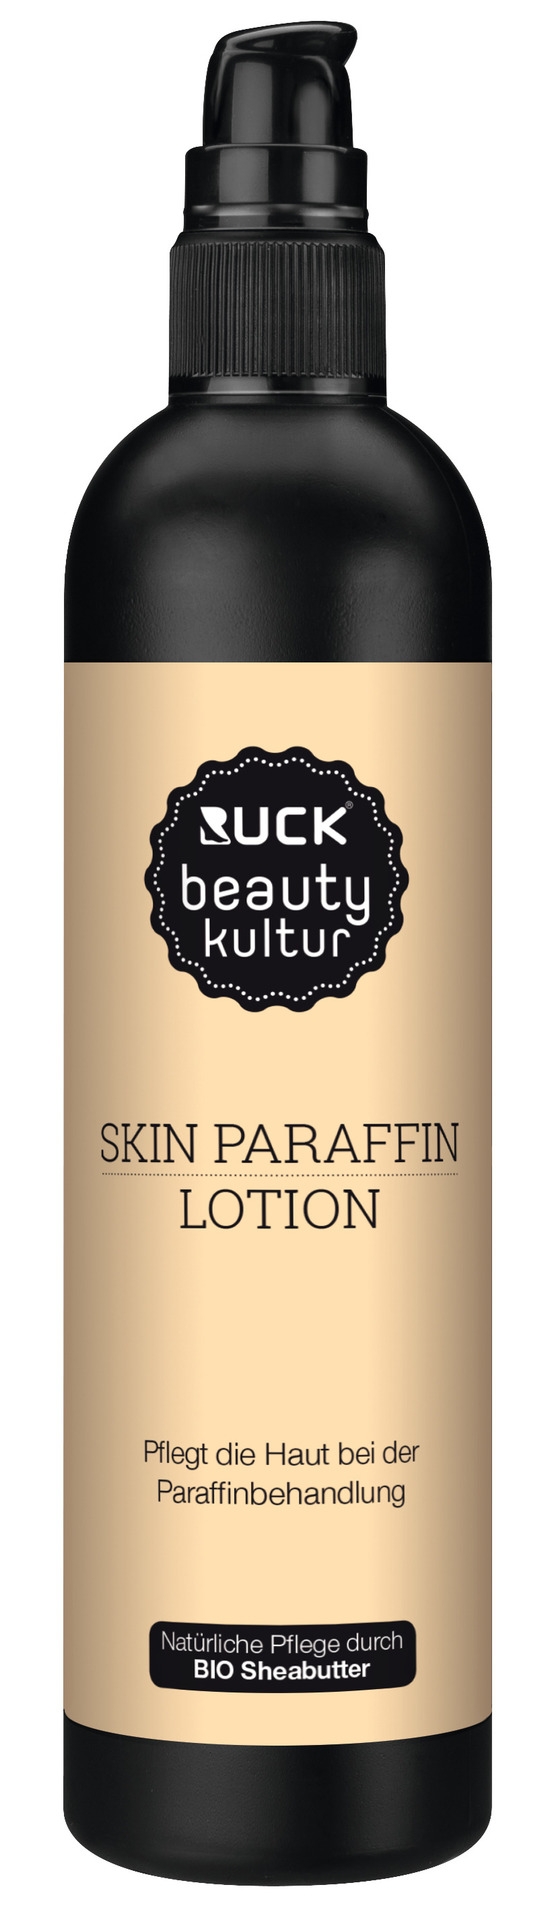 RUCK beautykultur SKIN Paraffin Lotion | 200 ml